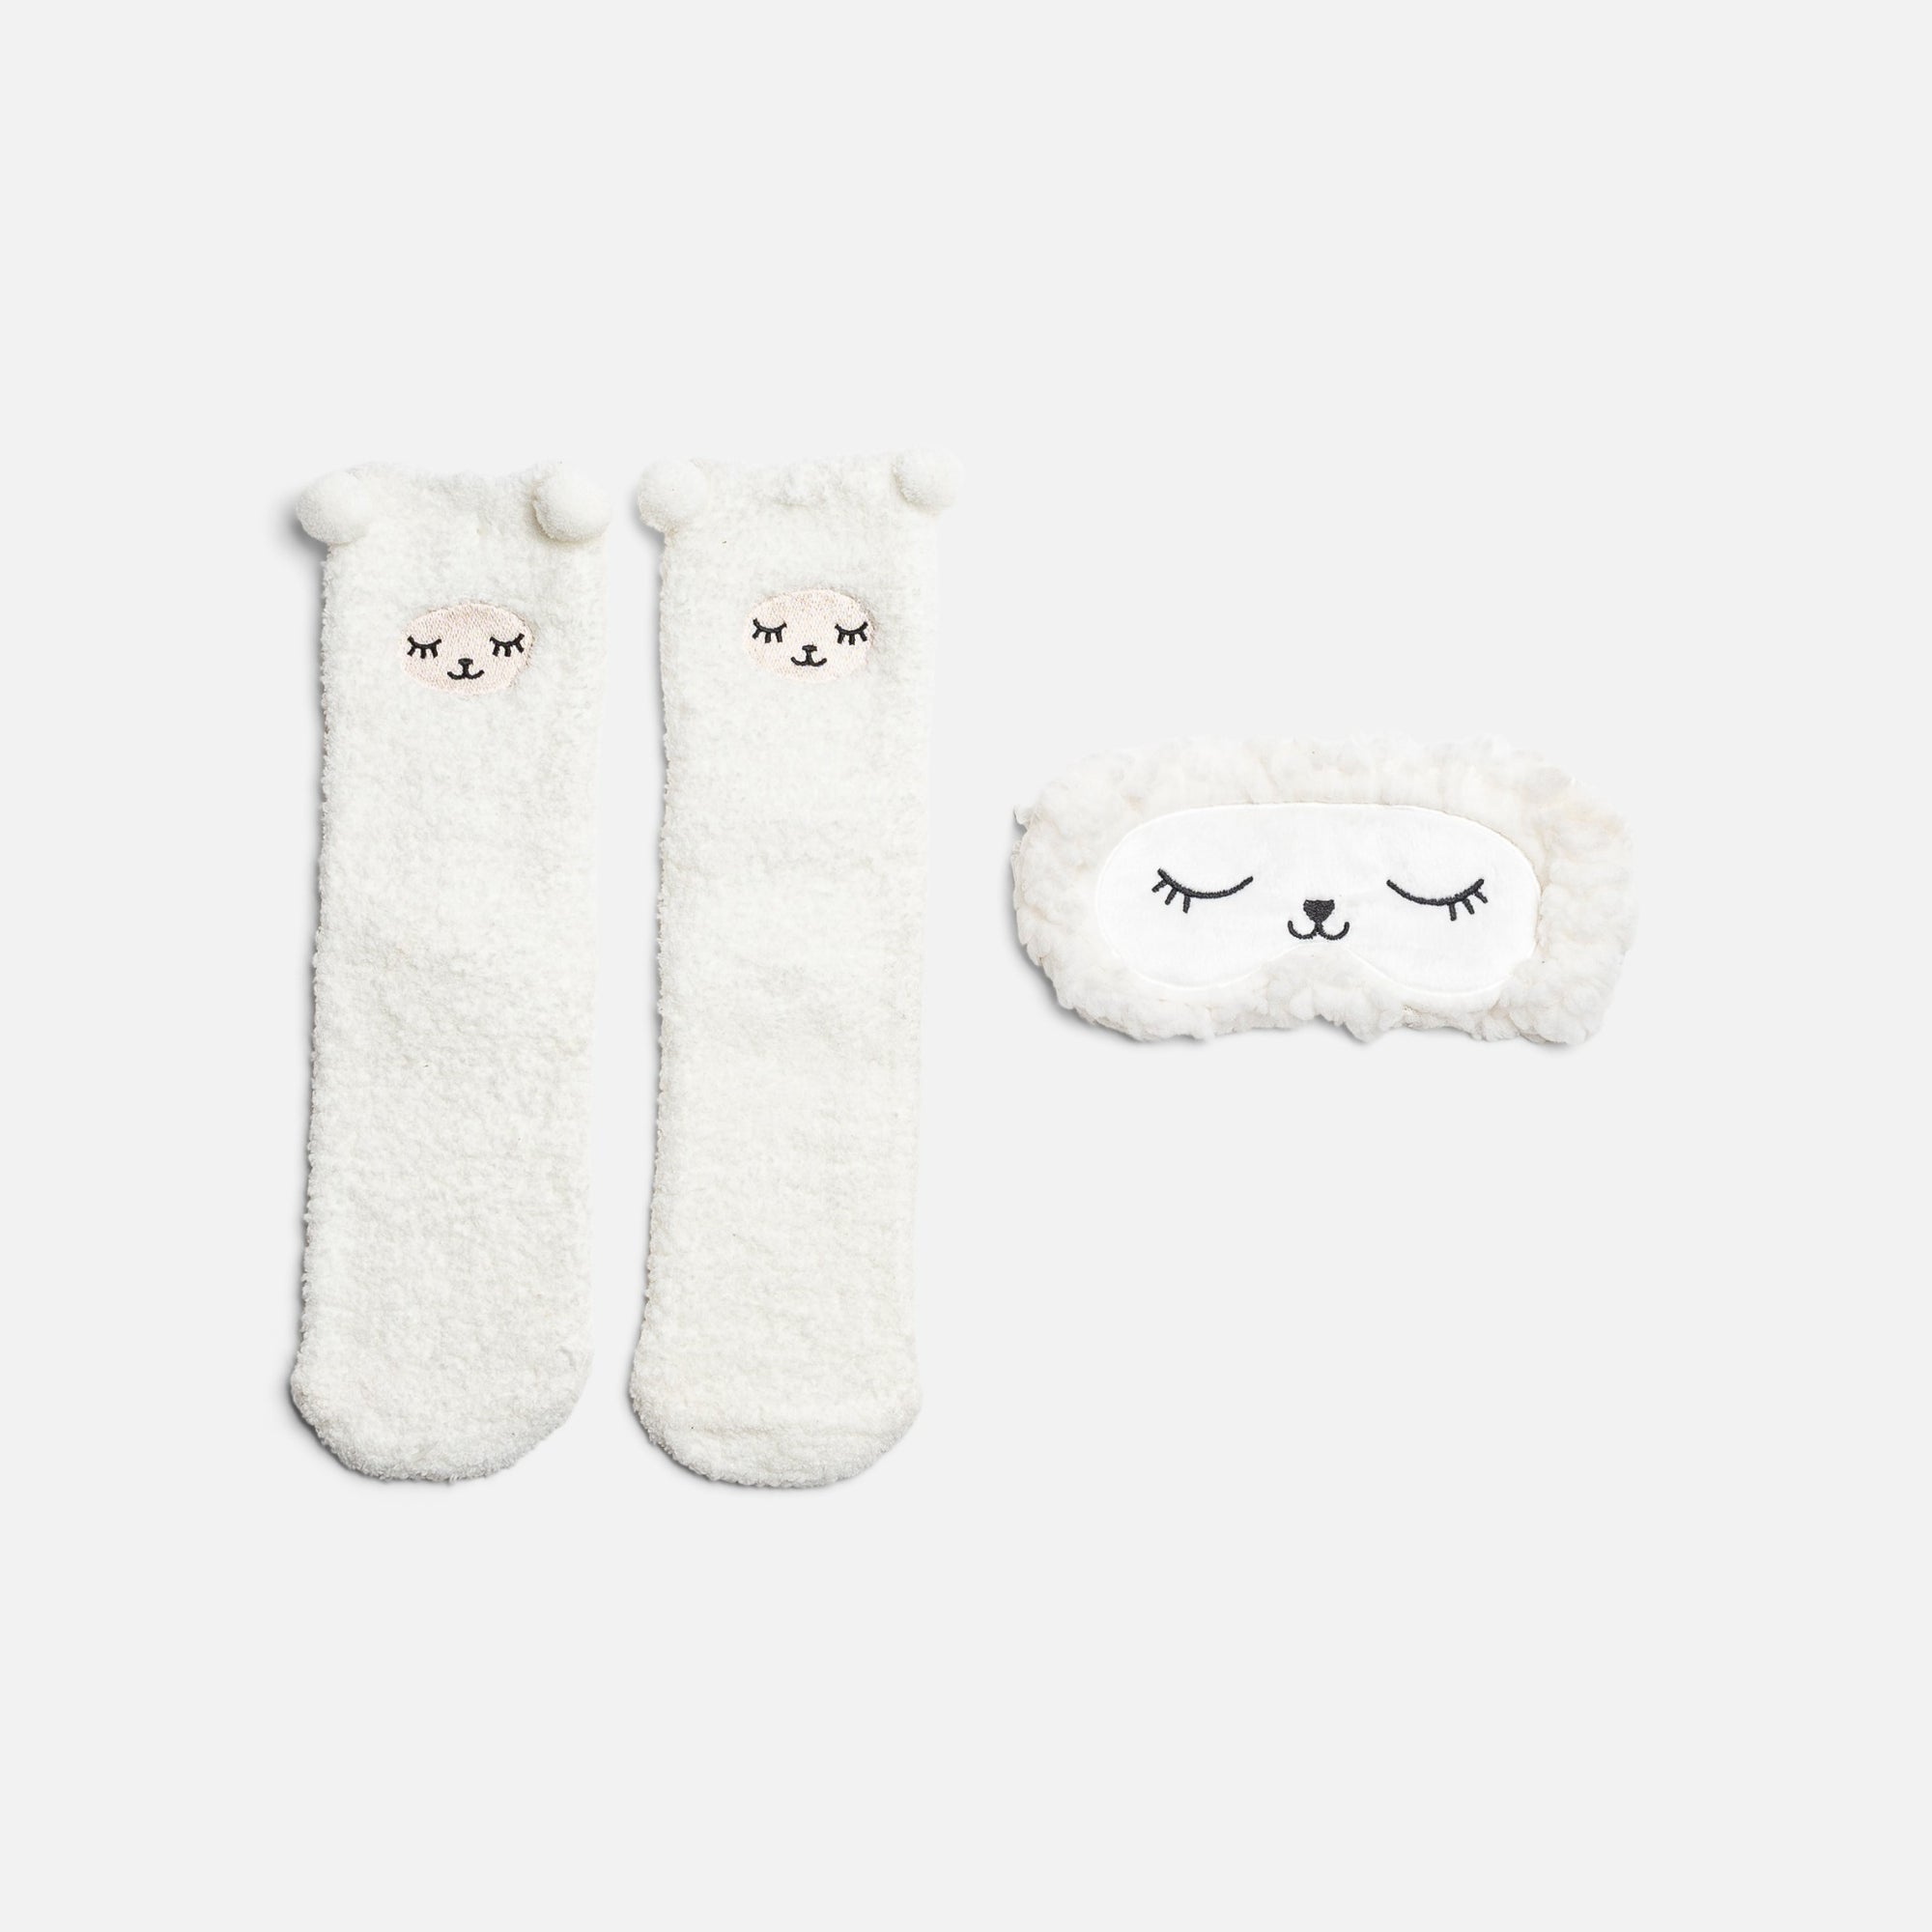 Cozy socks and sleeping mask with sheep 